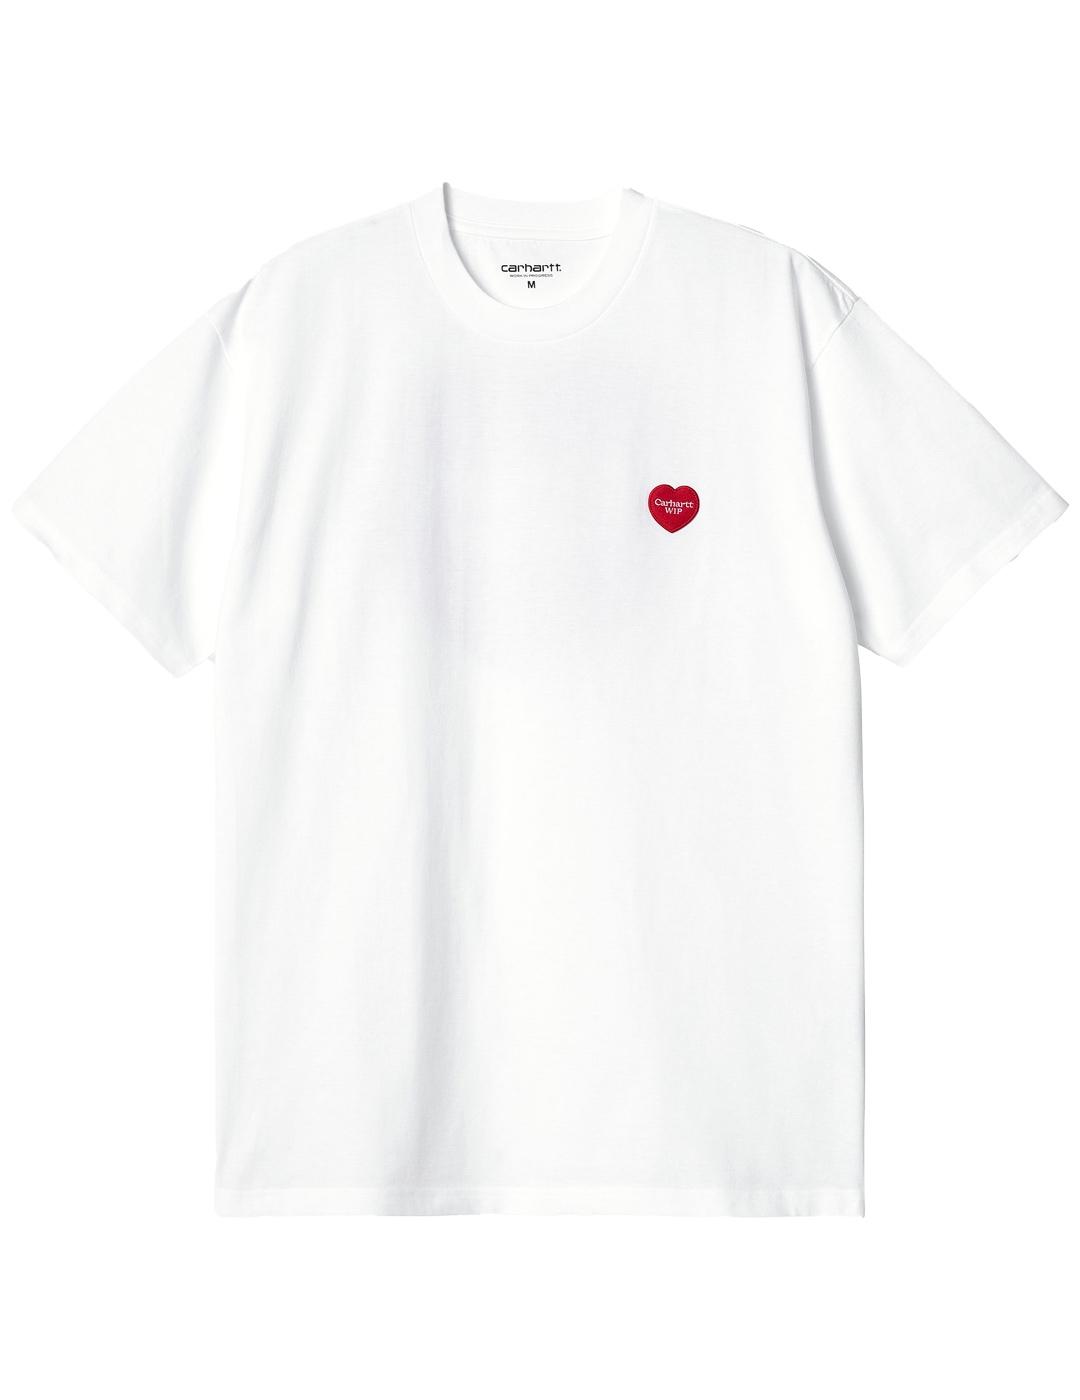 Camiseta Carhartt Double Heart Blanco